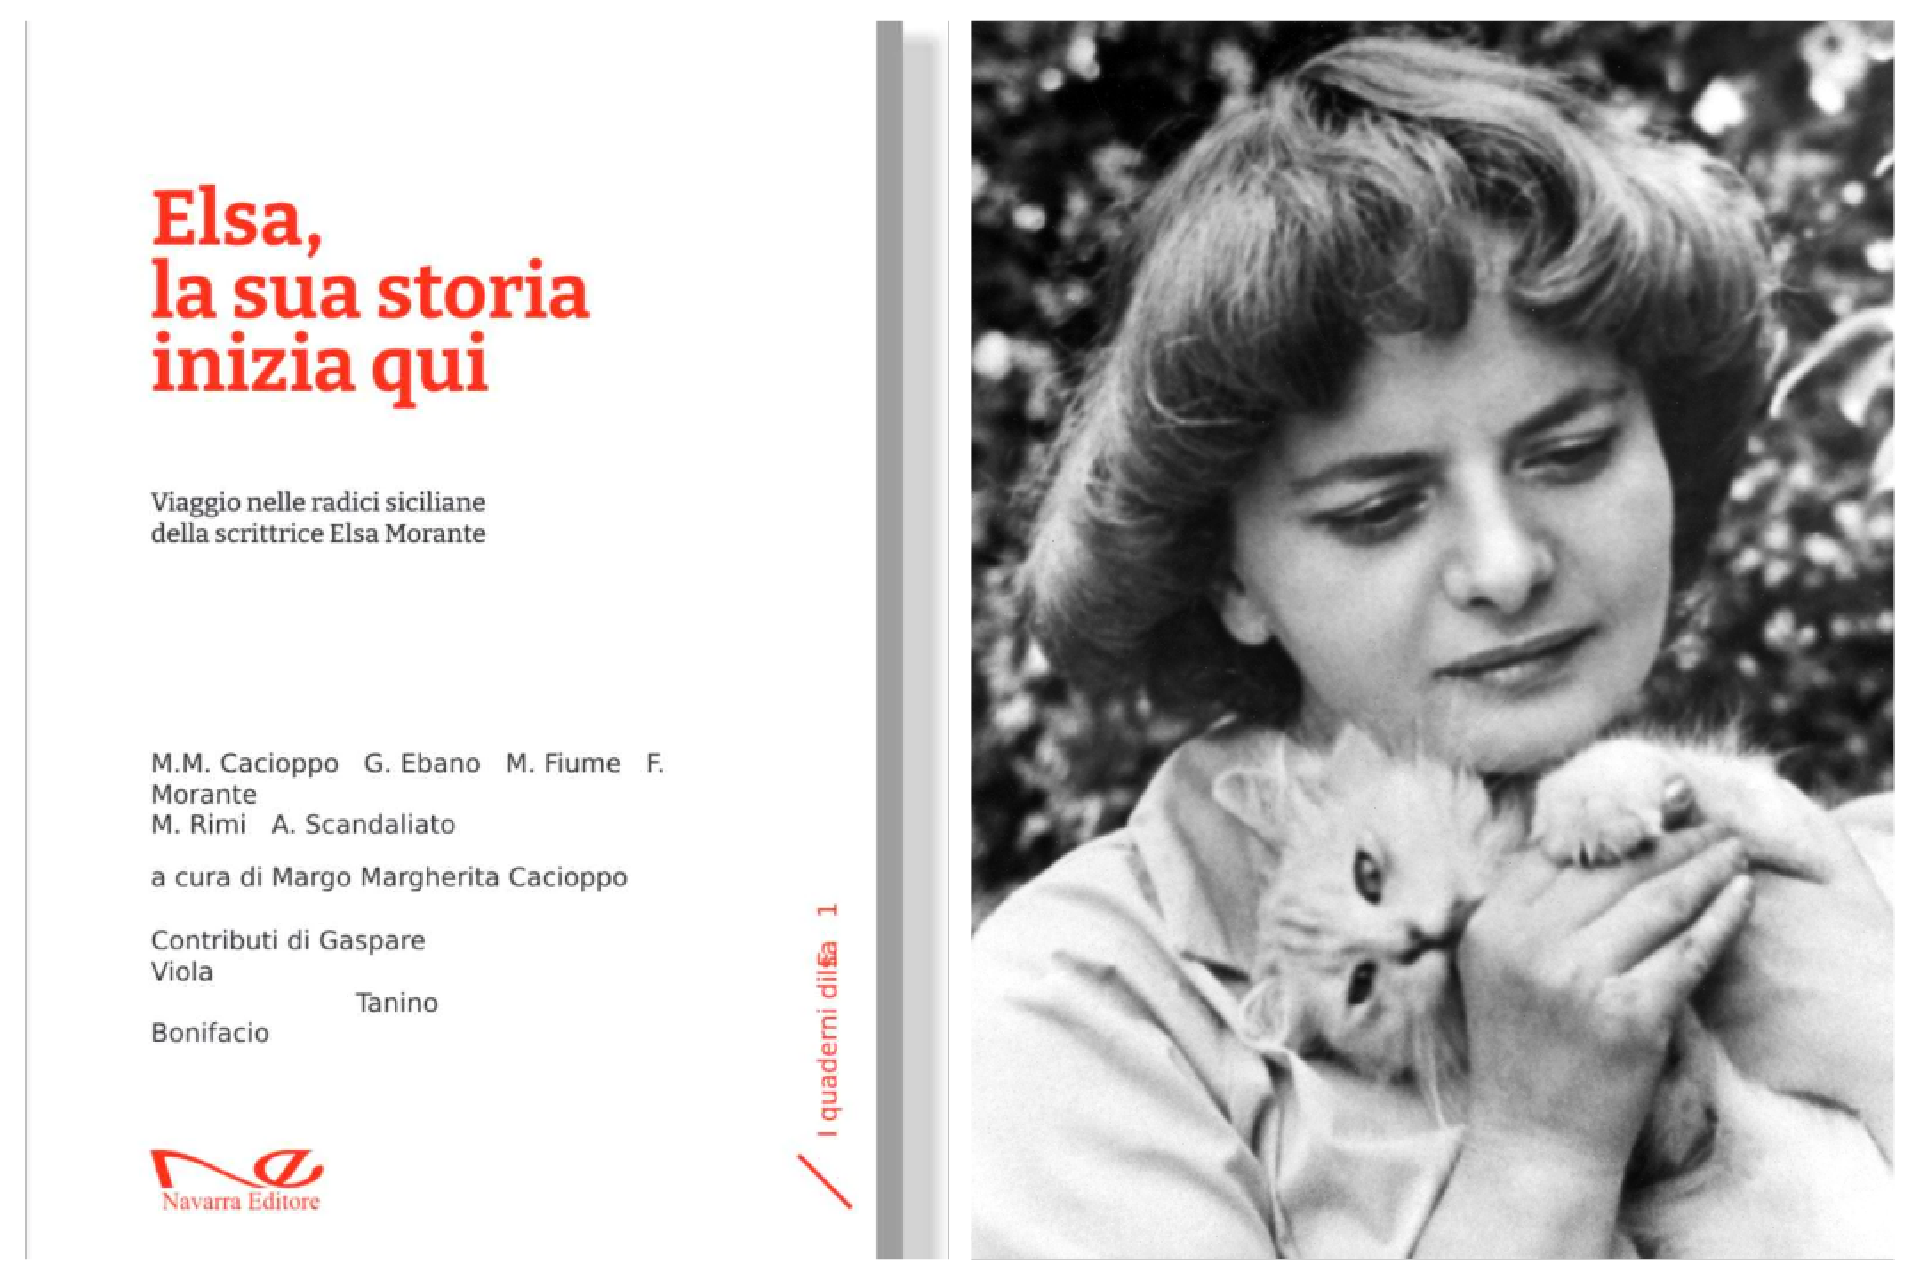 Biografia Elsa Morante, vita e storia